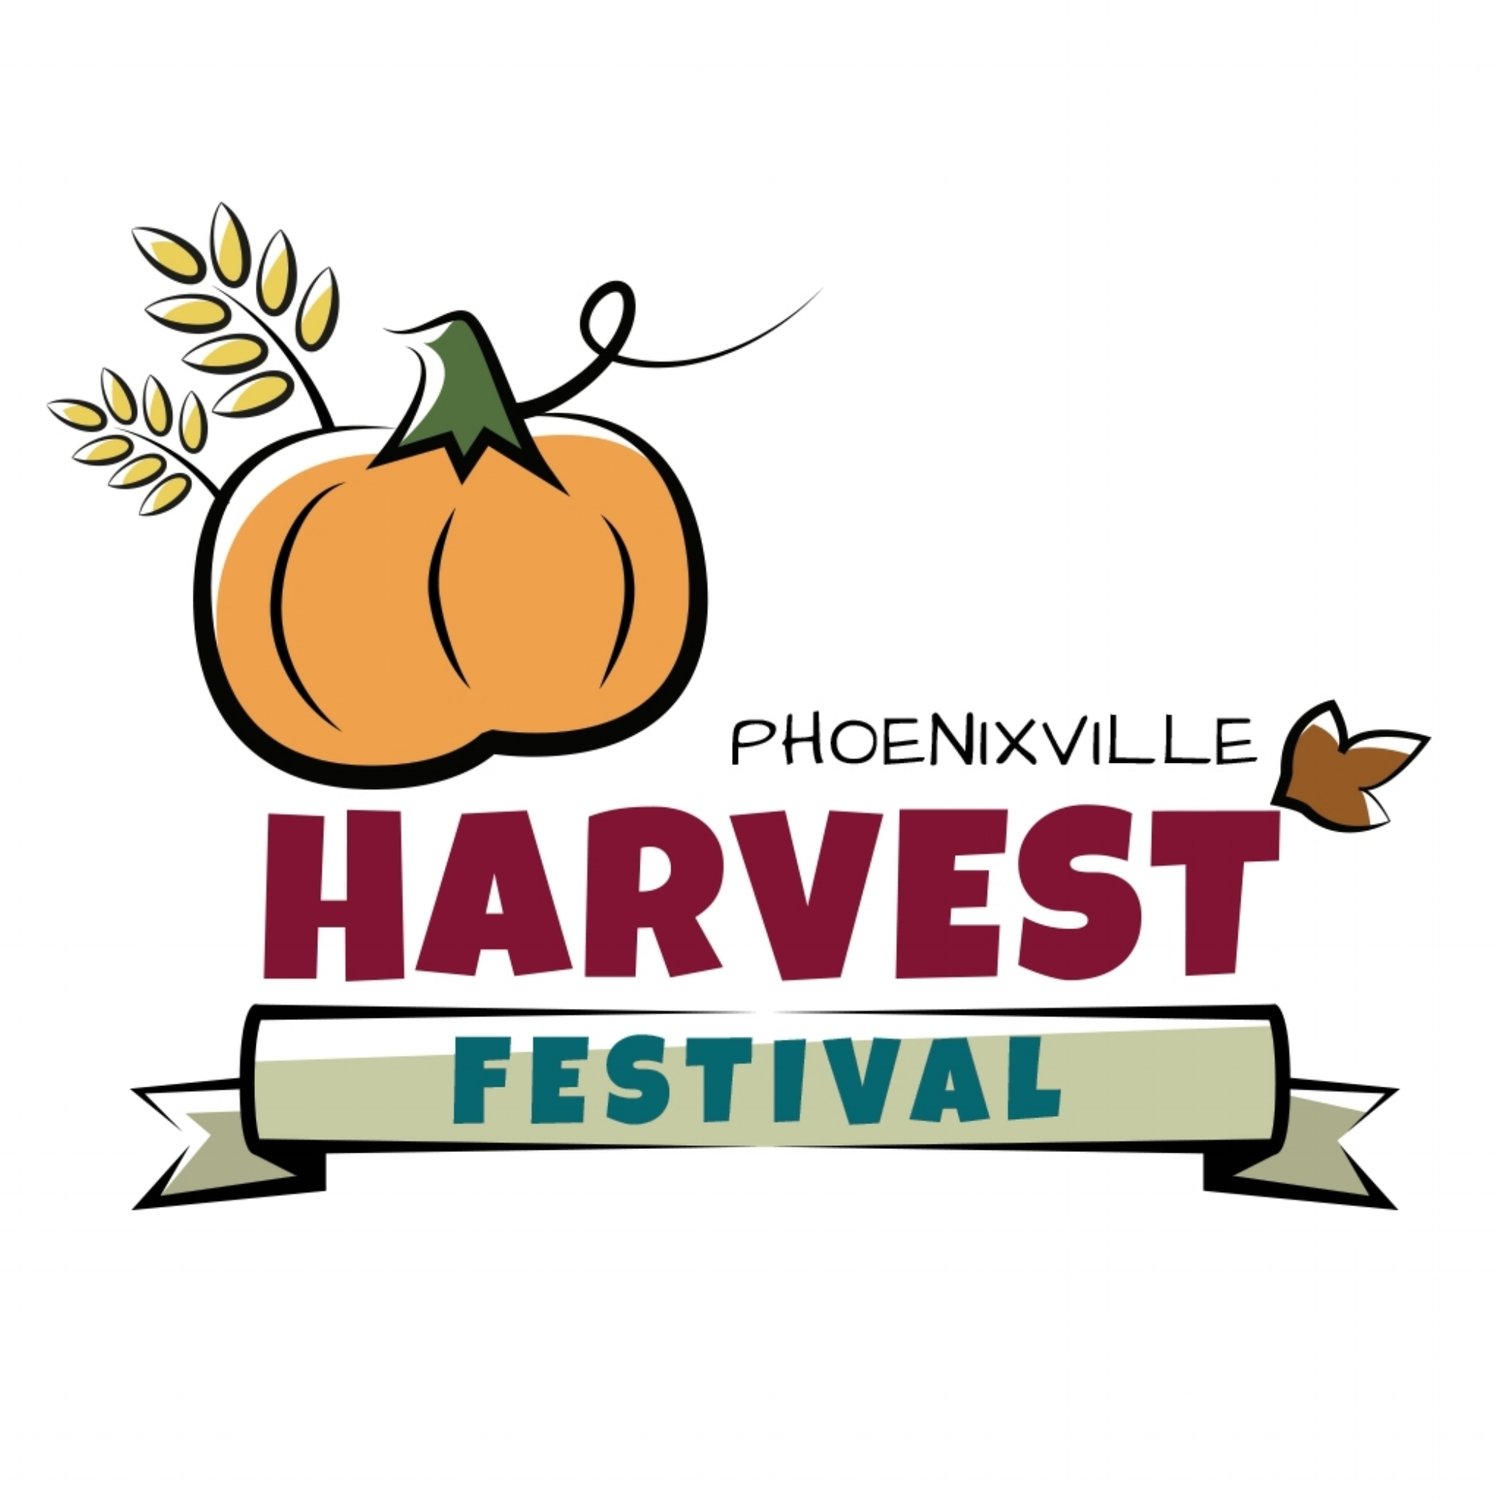 Phoenixville Harvest Fest